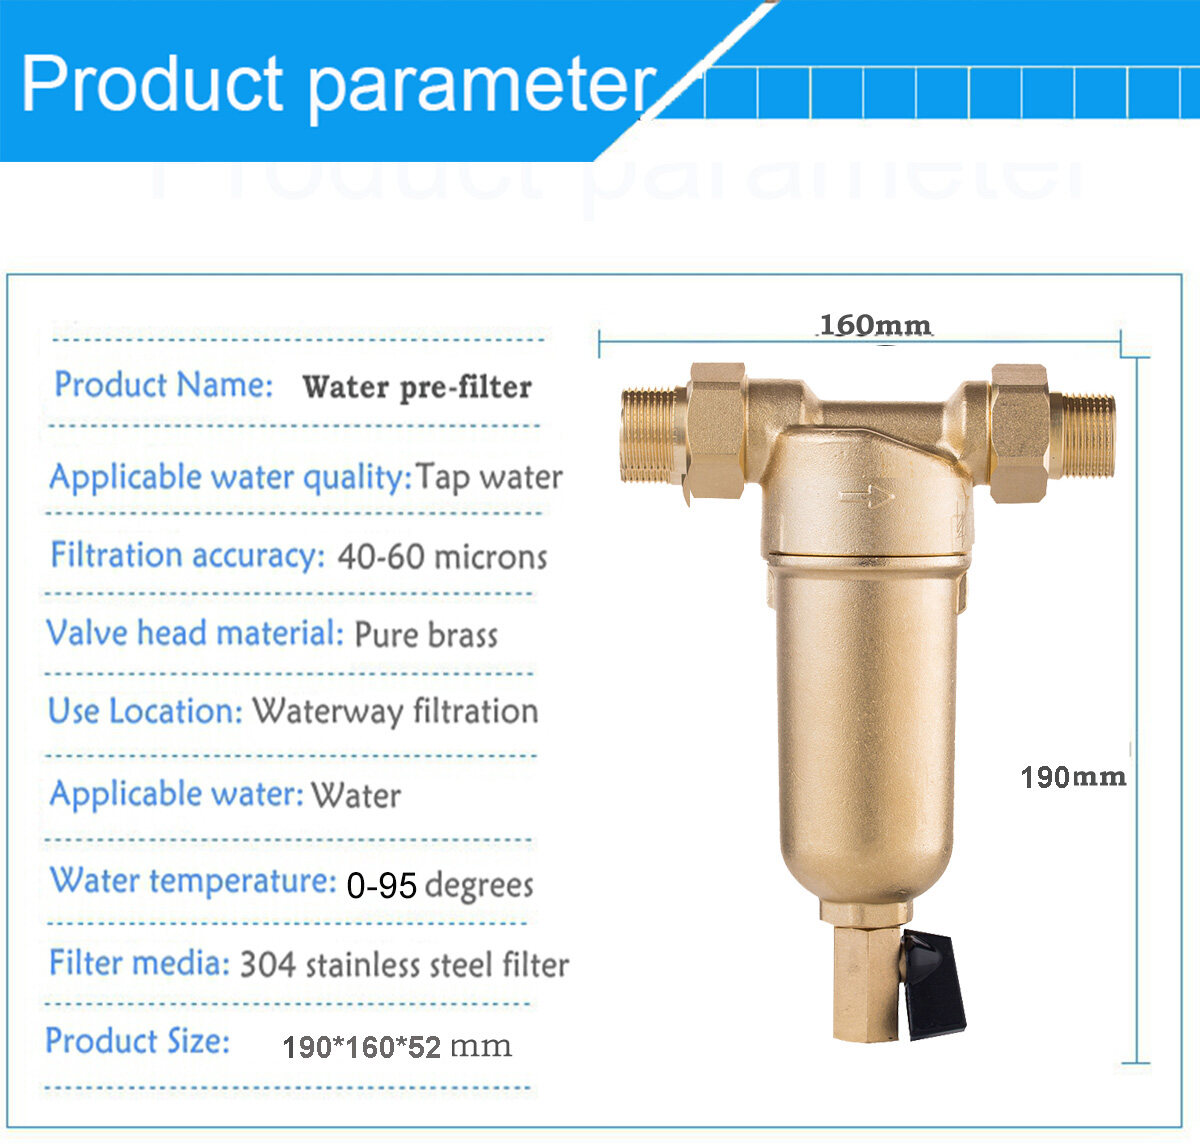 Siphon Backwas Pre-filter Hot Water Filter Whole Brass Purifier